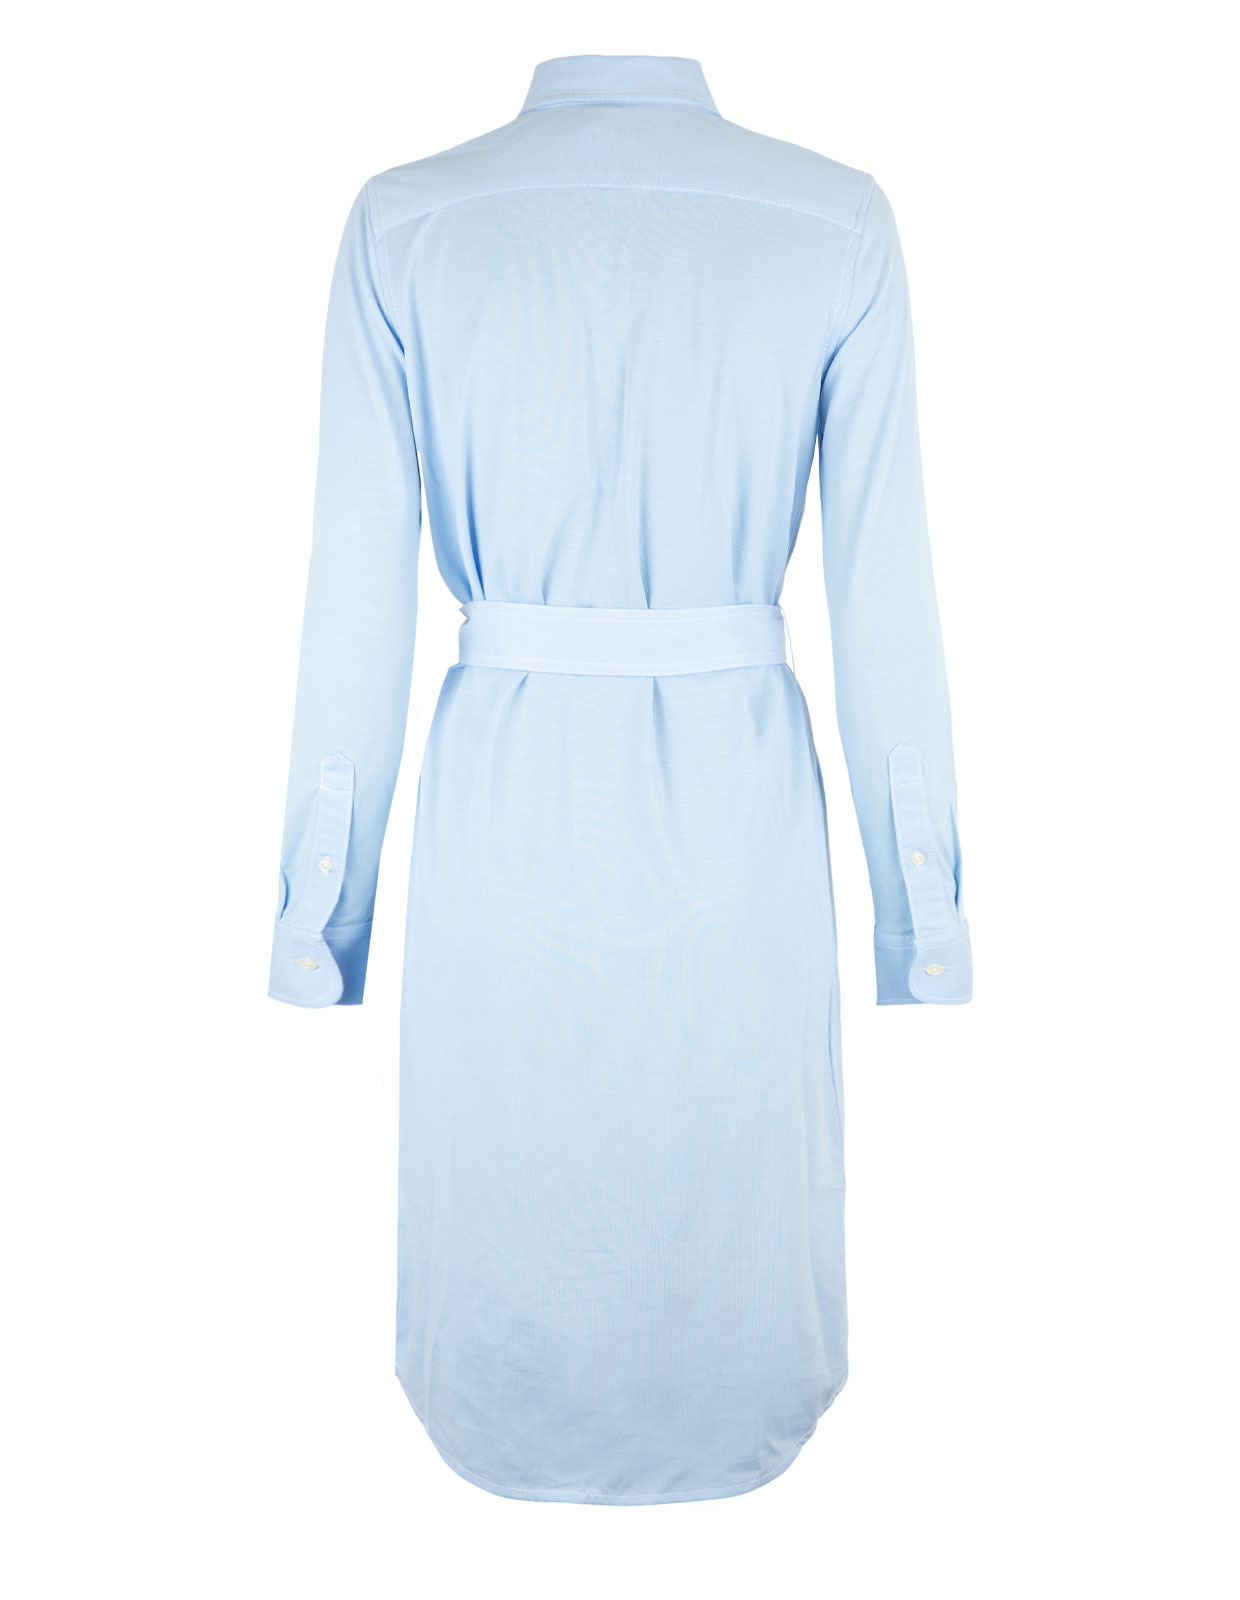 Heidi Casual Piquet Dress Elite Blue